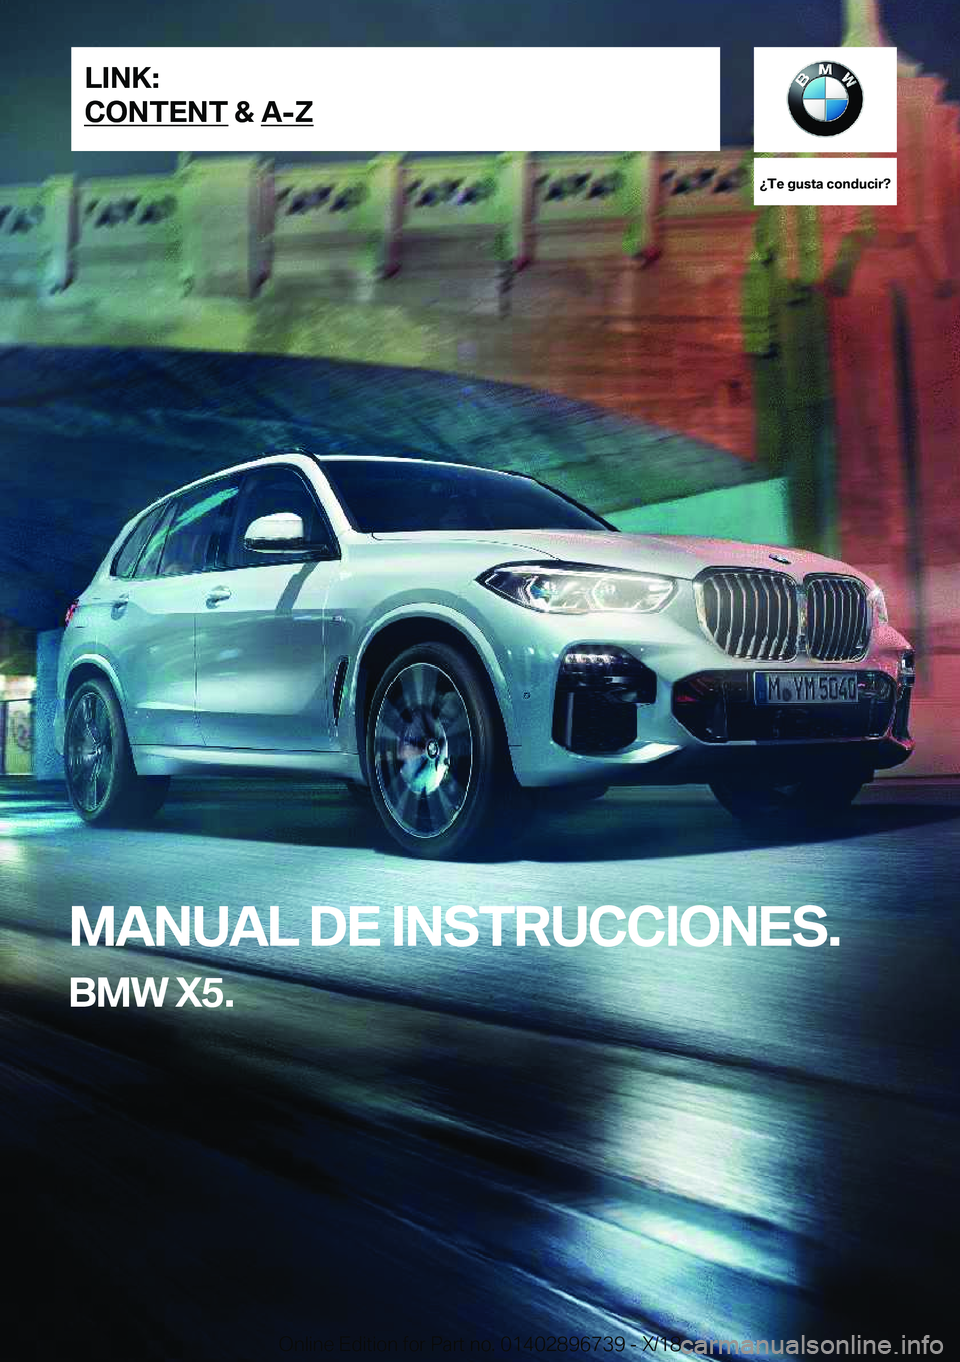 BMW X5 2019  Manuales de Empleo (in Spanish) ��T�e��g�u�s�t�a��c�o�n�d�u�c�i�r� 
�M�A�N�U�A�L��D�E��I�N�S�T�R�U�C�C�I�O�N�E�S�.
�B�M�W��X�5�.�L�I�N�K�:
�C�O�N�T�E�N�T��&��A�-�Z�O�n�l�i�n�e��E�d�i�t�i�o�n��f�o�r��P�a�r�t��n�o�.��0�1�